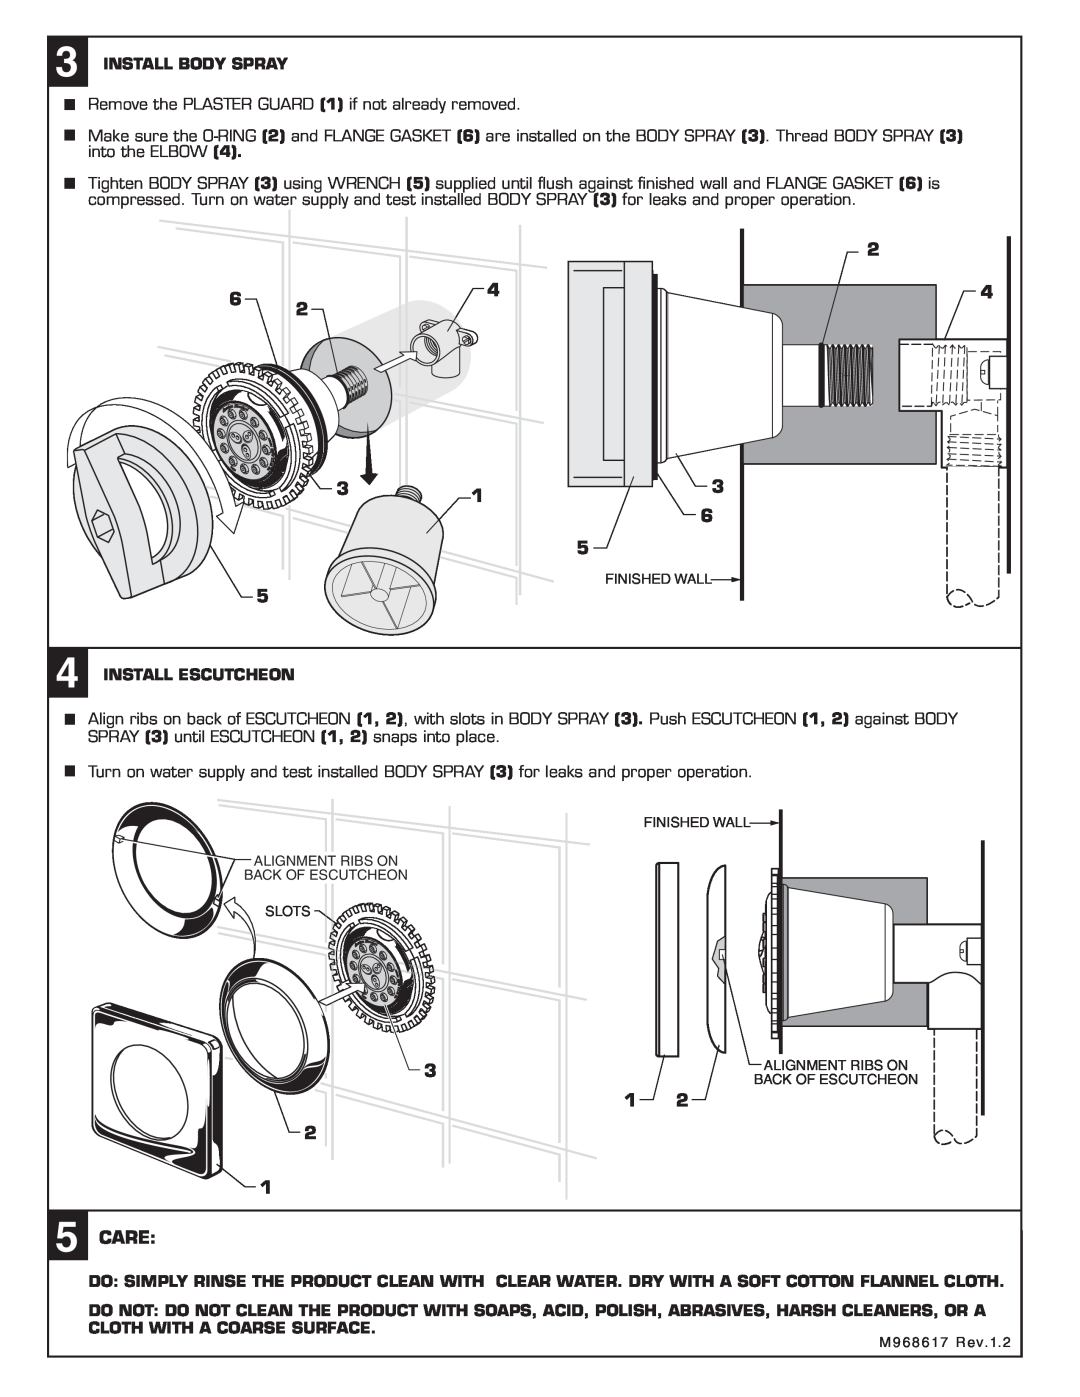 American Standard 1660.13, 1660.14 installation instructions Care, Install Body Spray, Install Escutcheon 